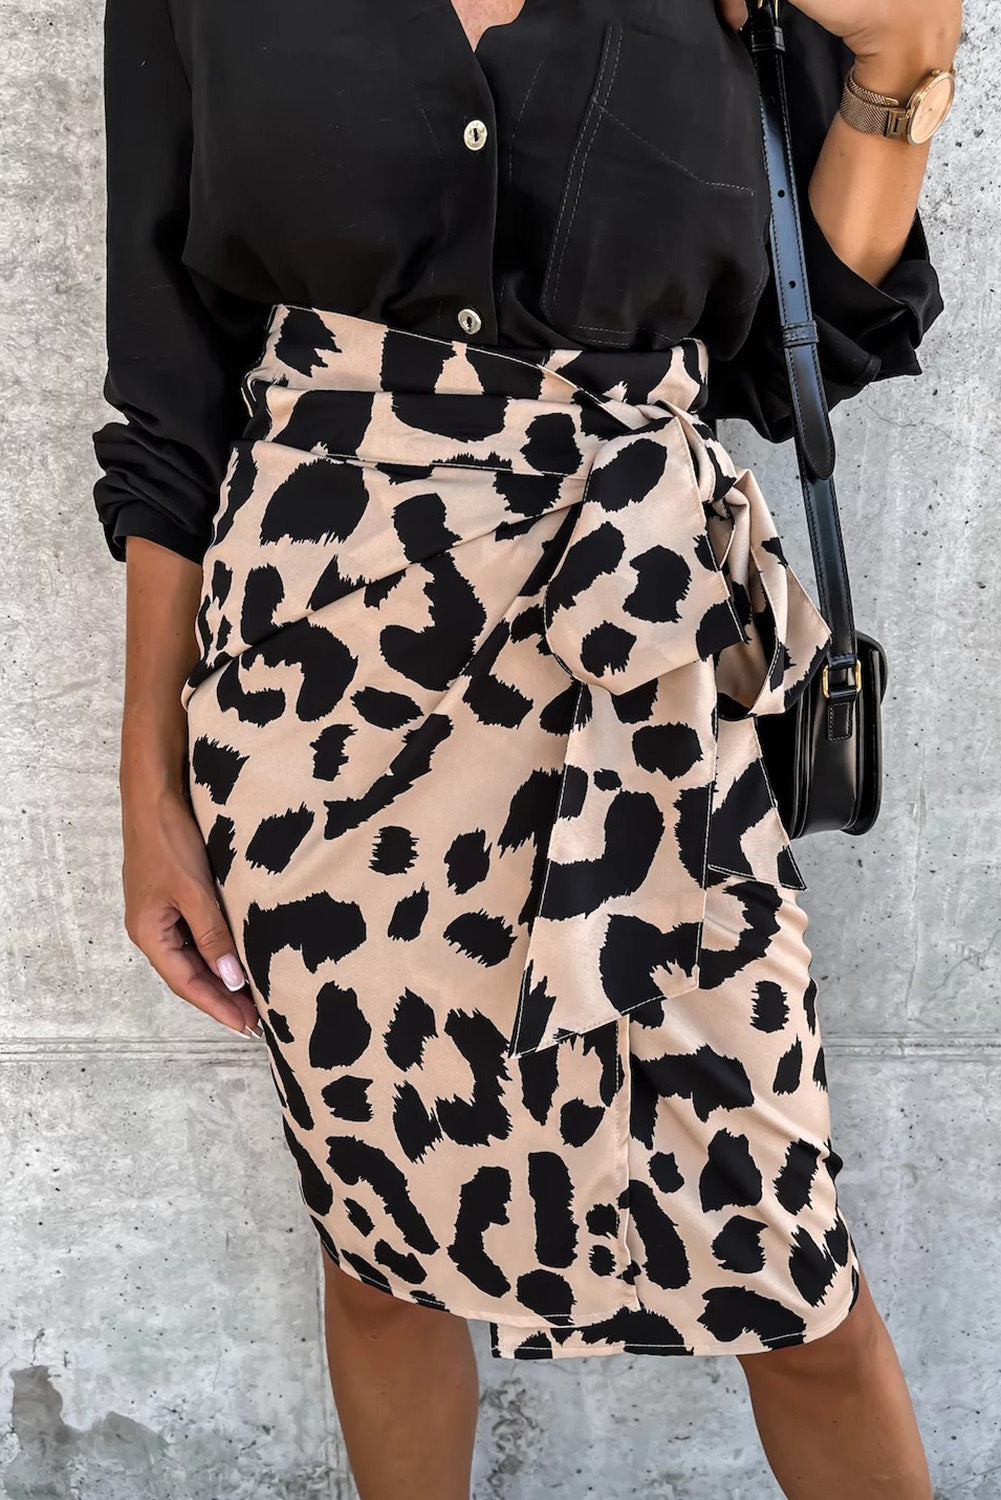 Leopard High Waist Skirt with Tie Item NO: 1194